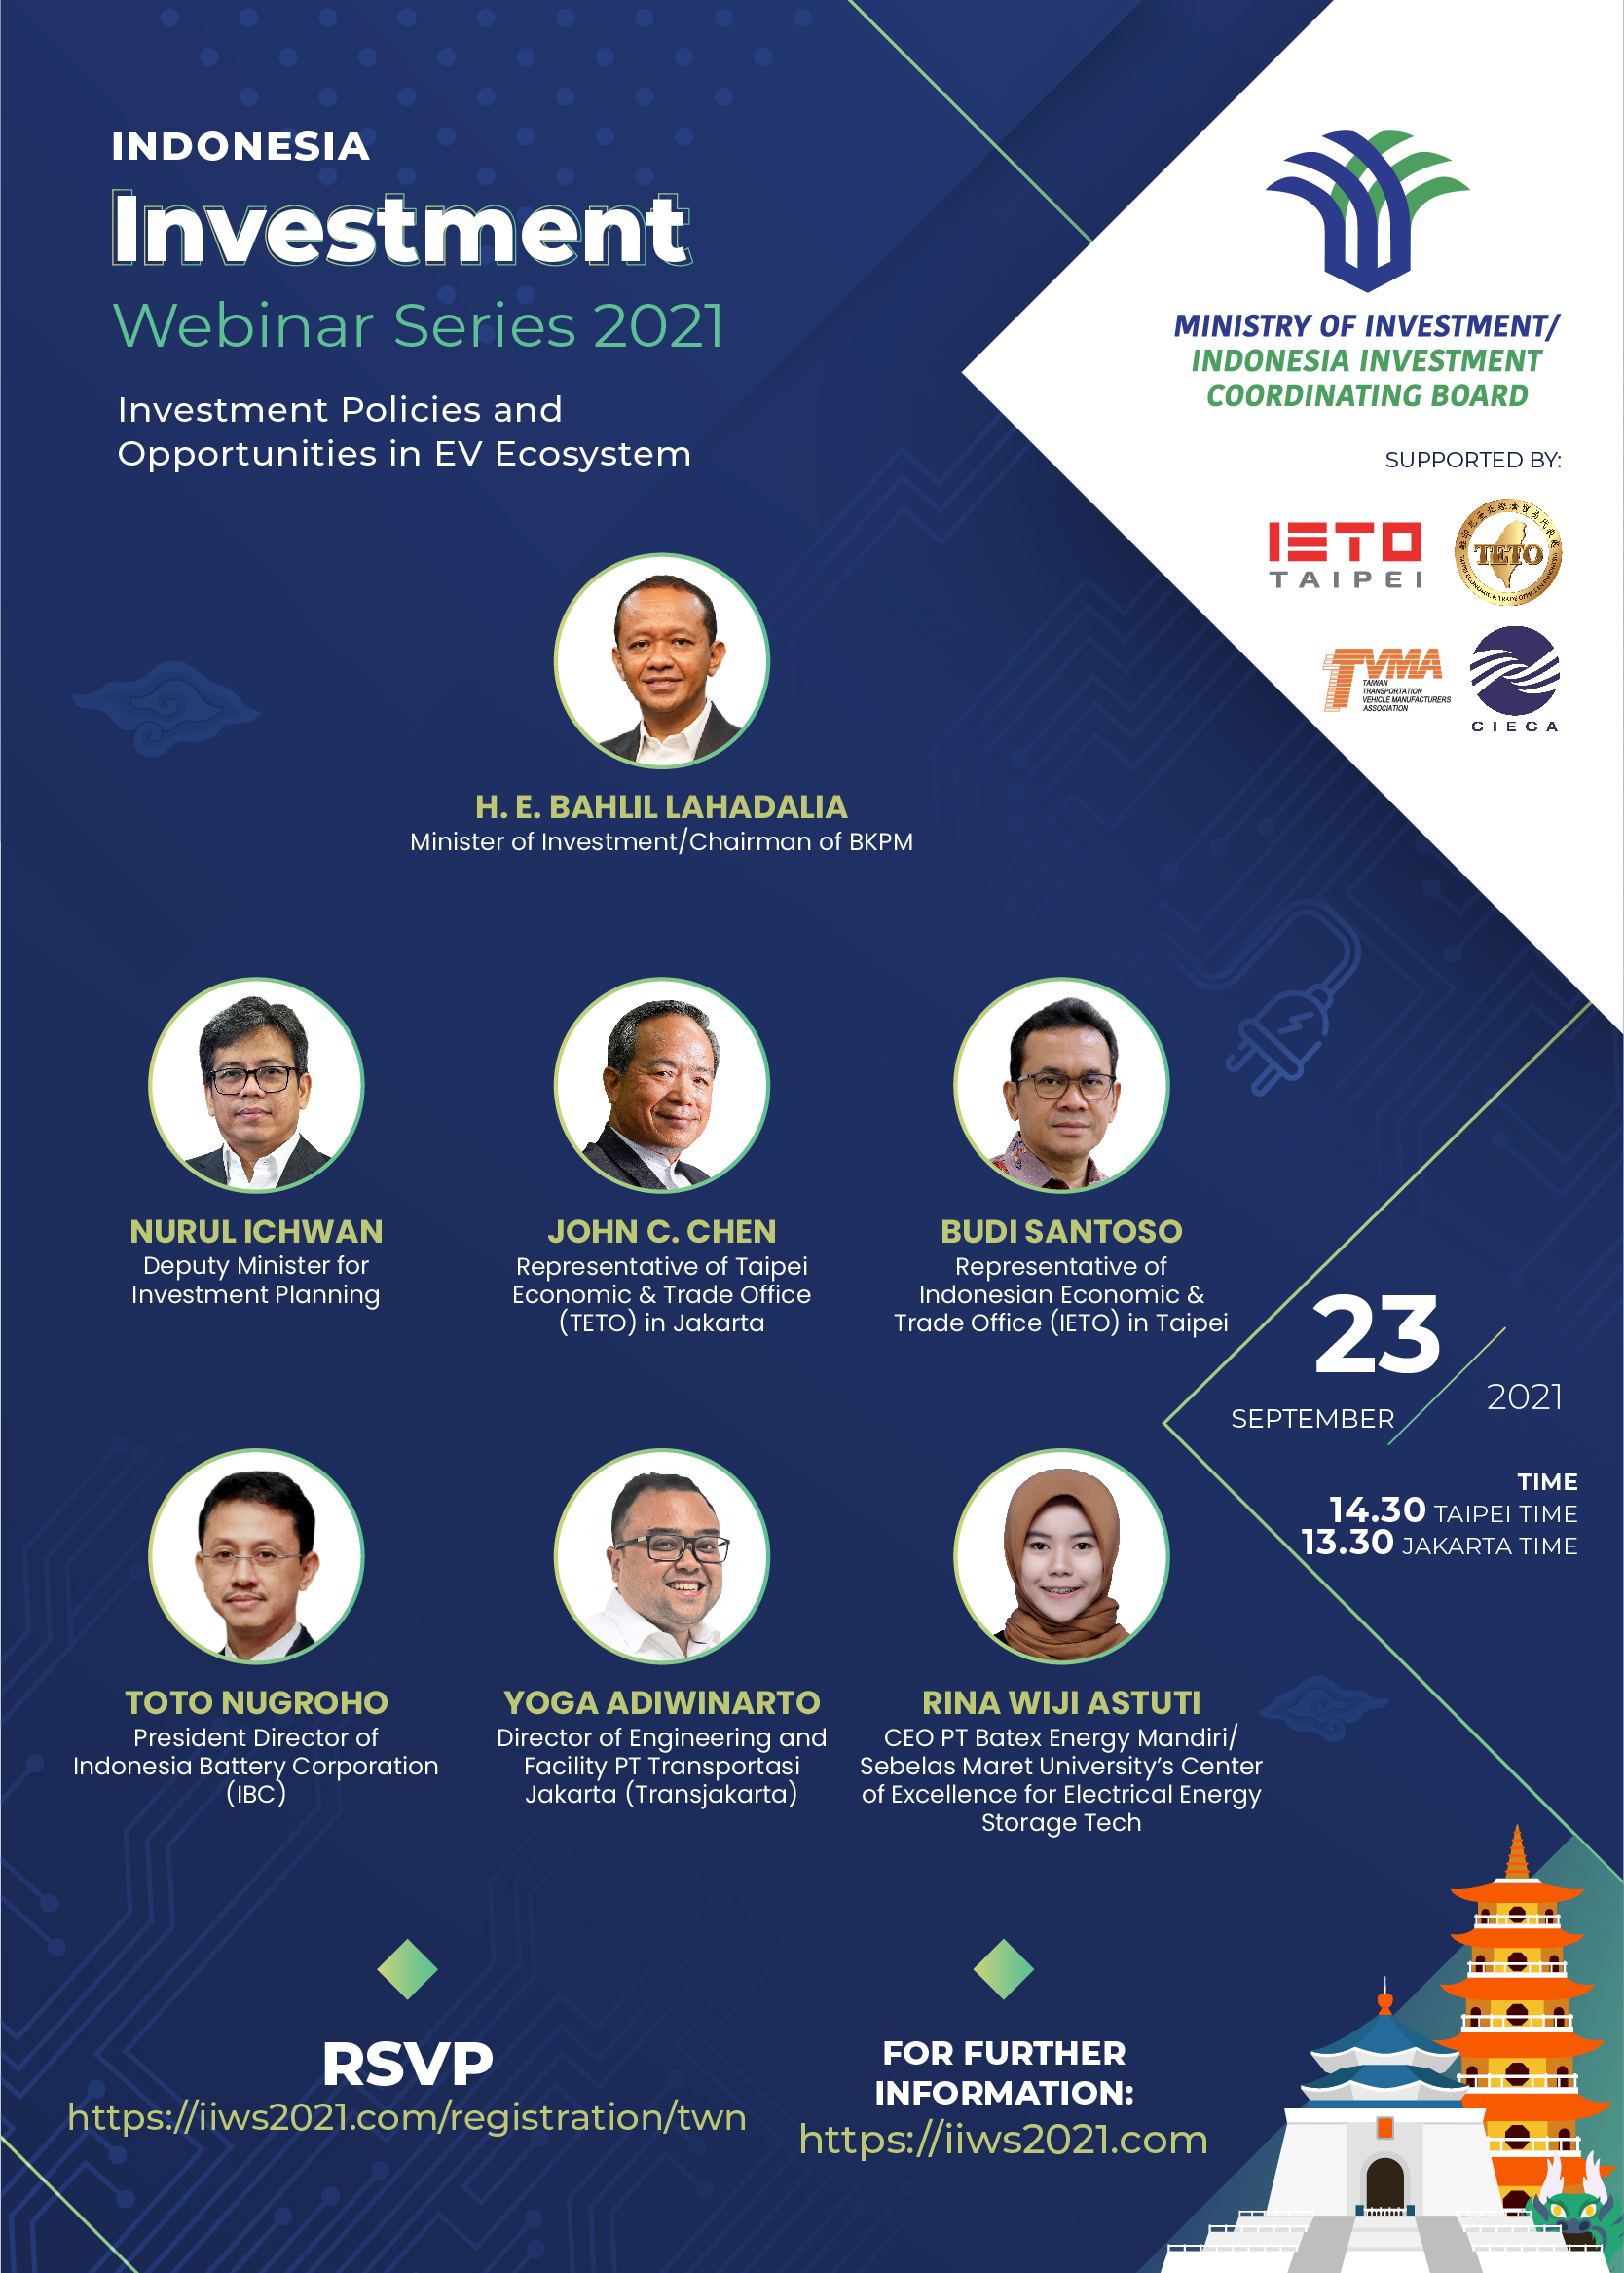  Indonesia Investment Webinar Series 2021